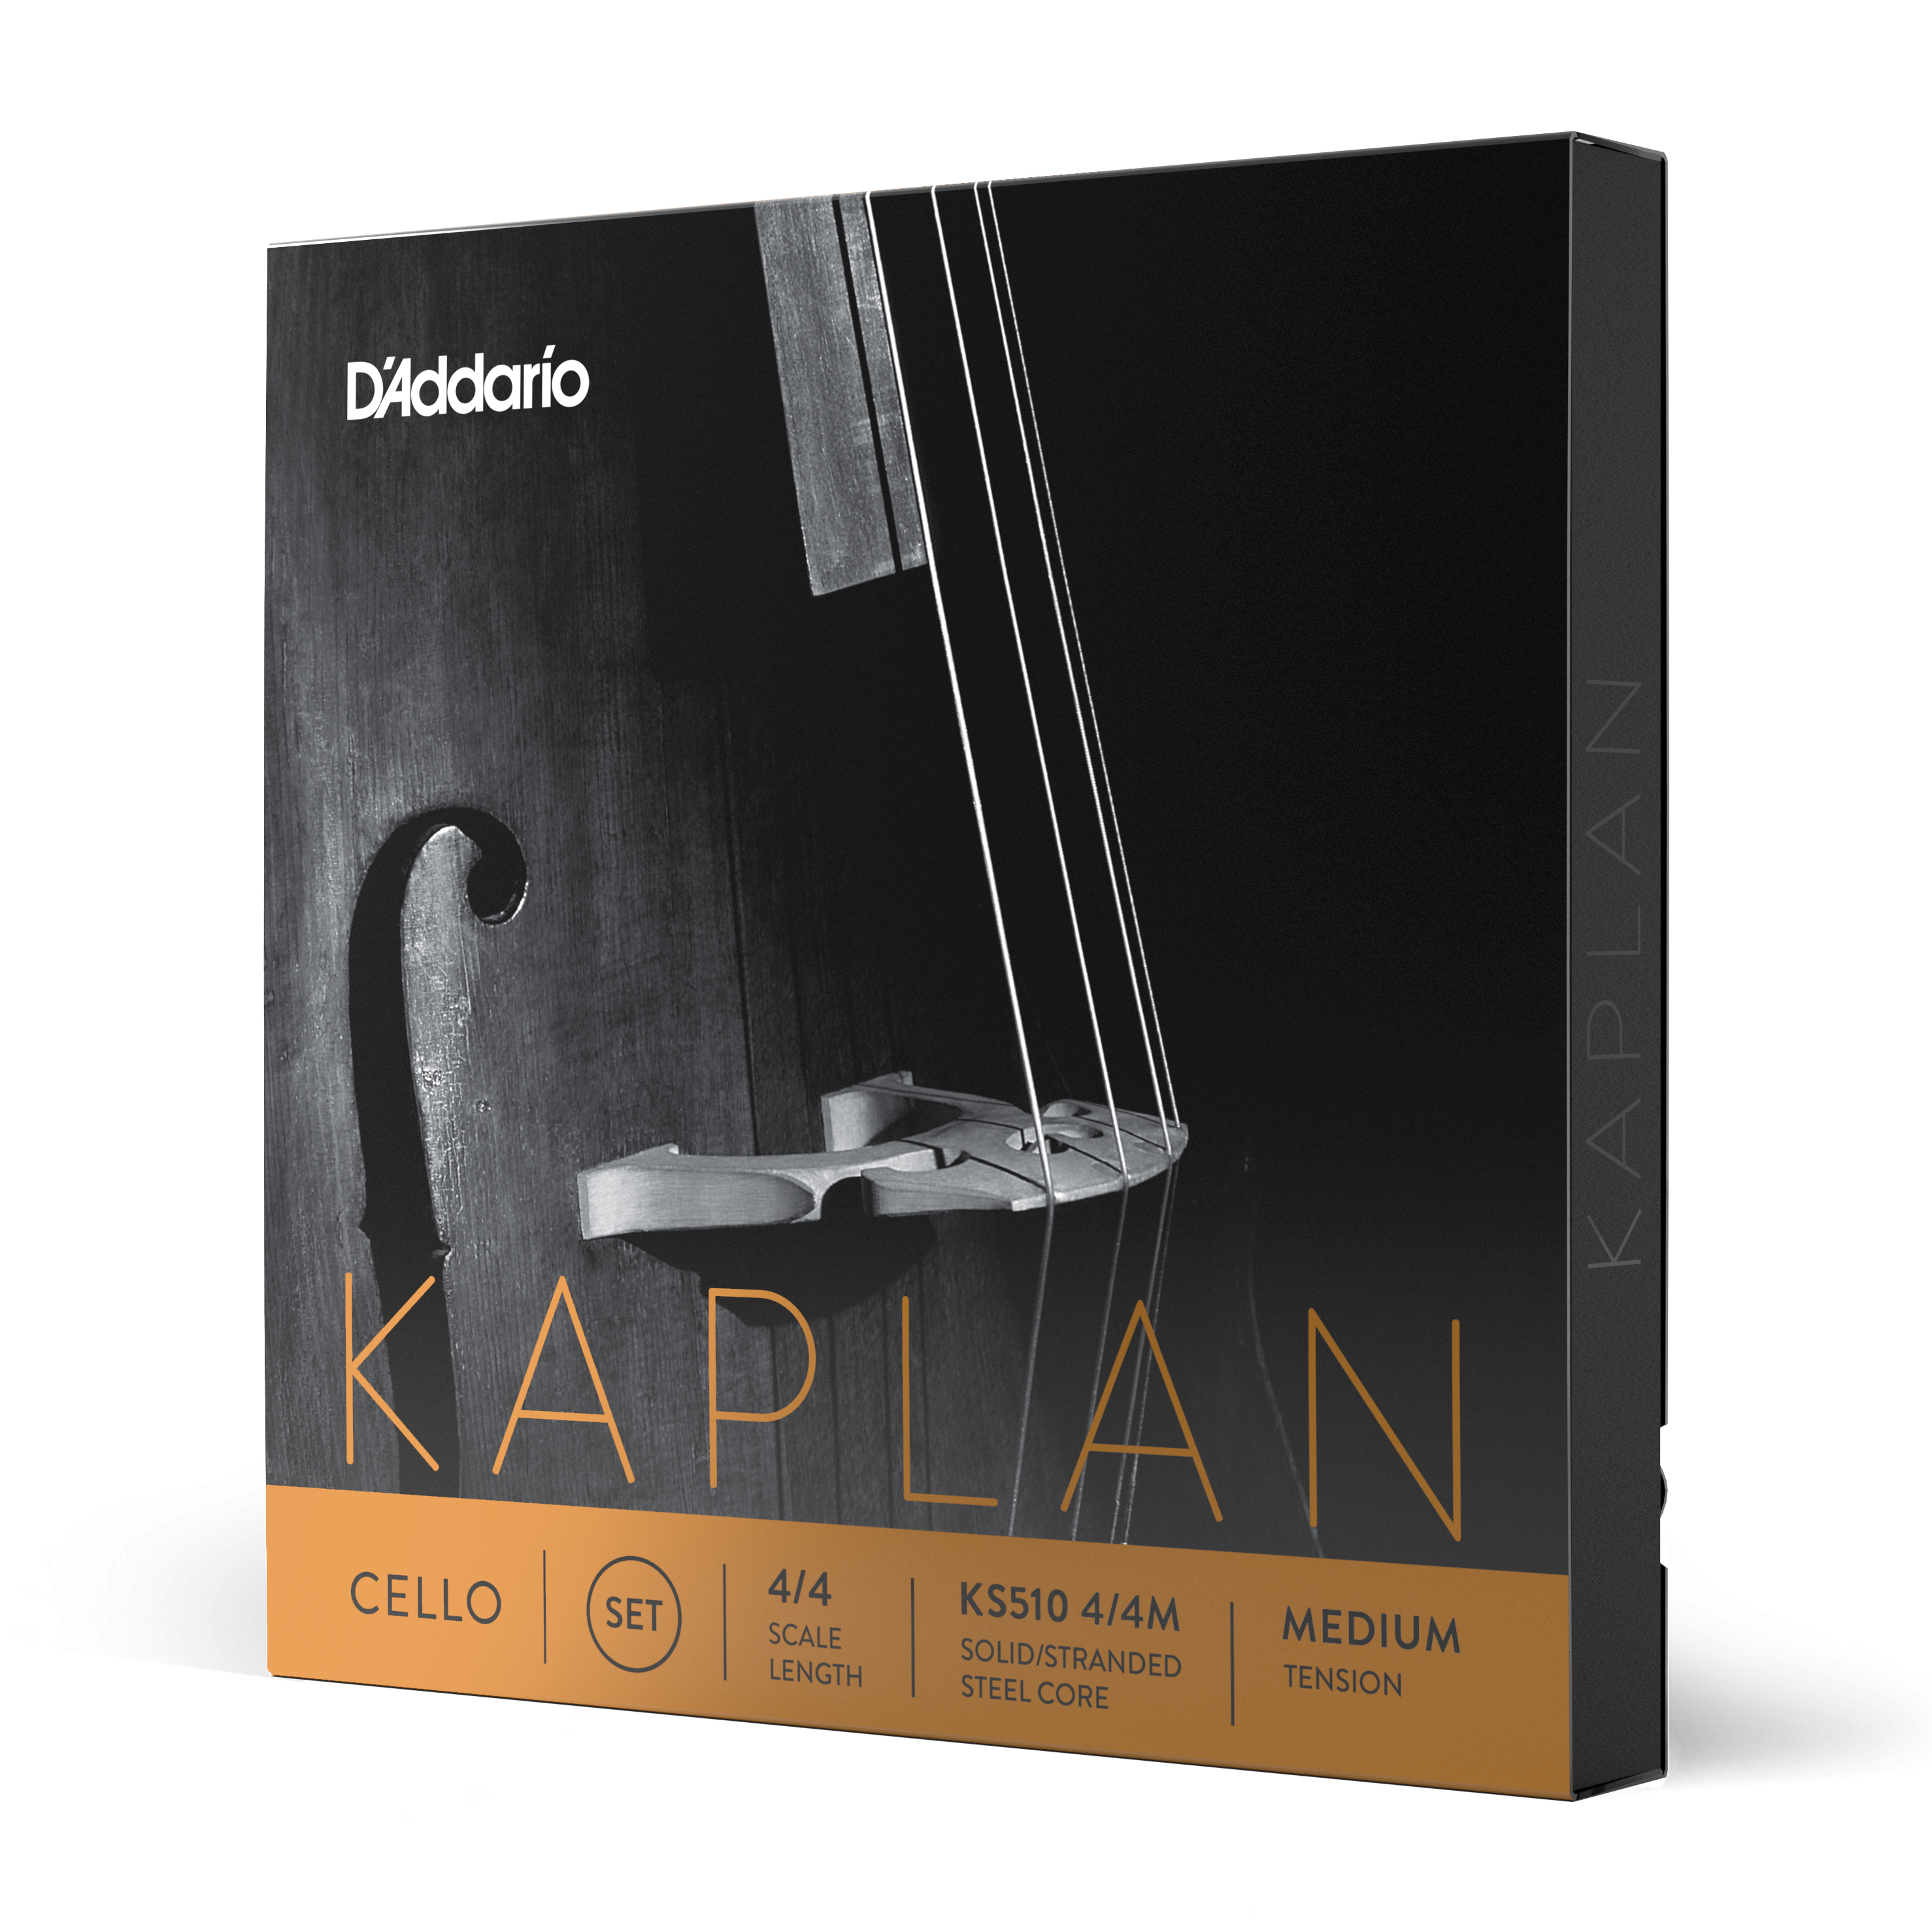 Daddario orchestral it Ks510 4/4m set di corde d'addario kaplan per violoncello, scala 4/4, tensione media